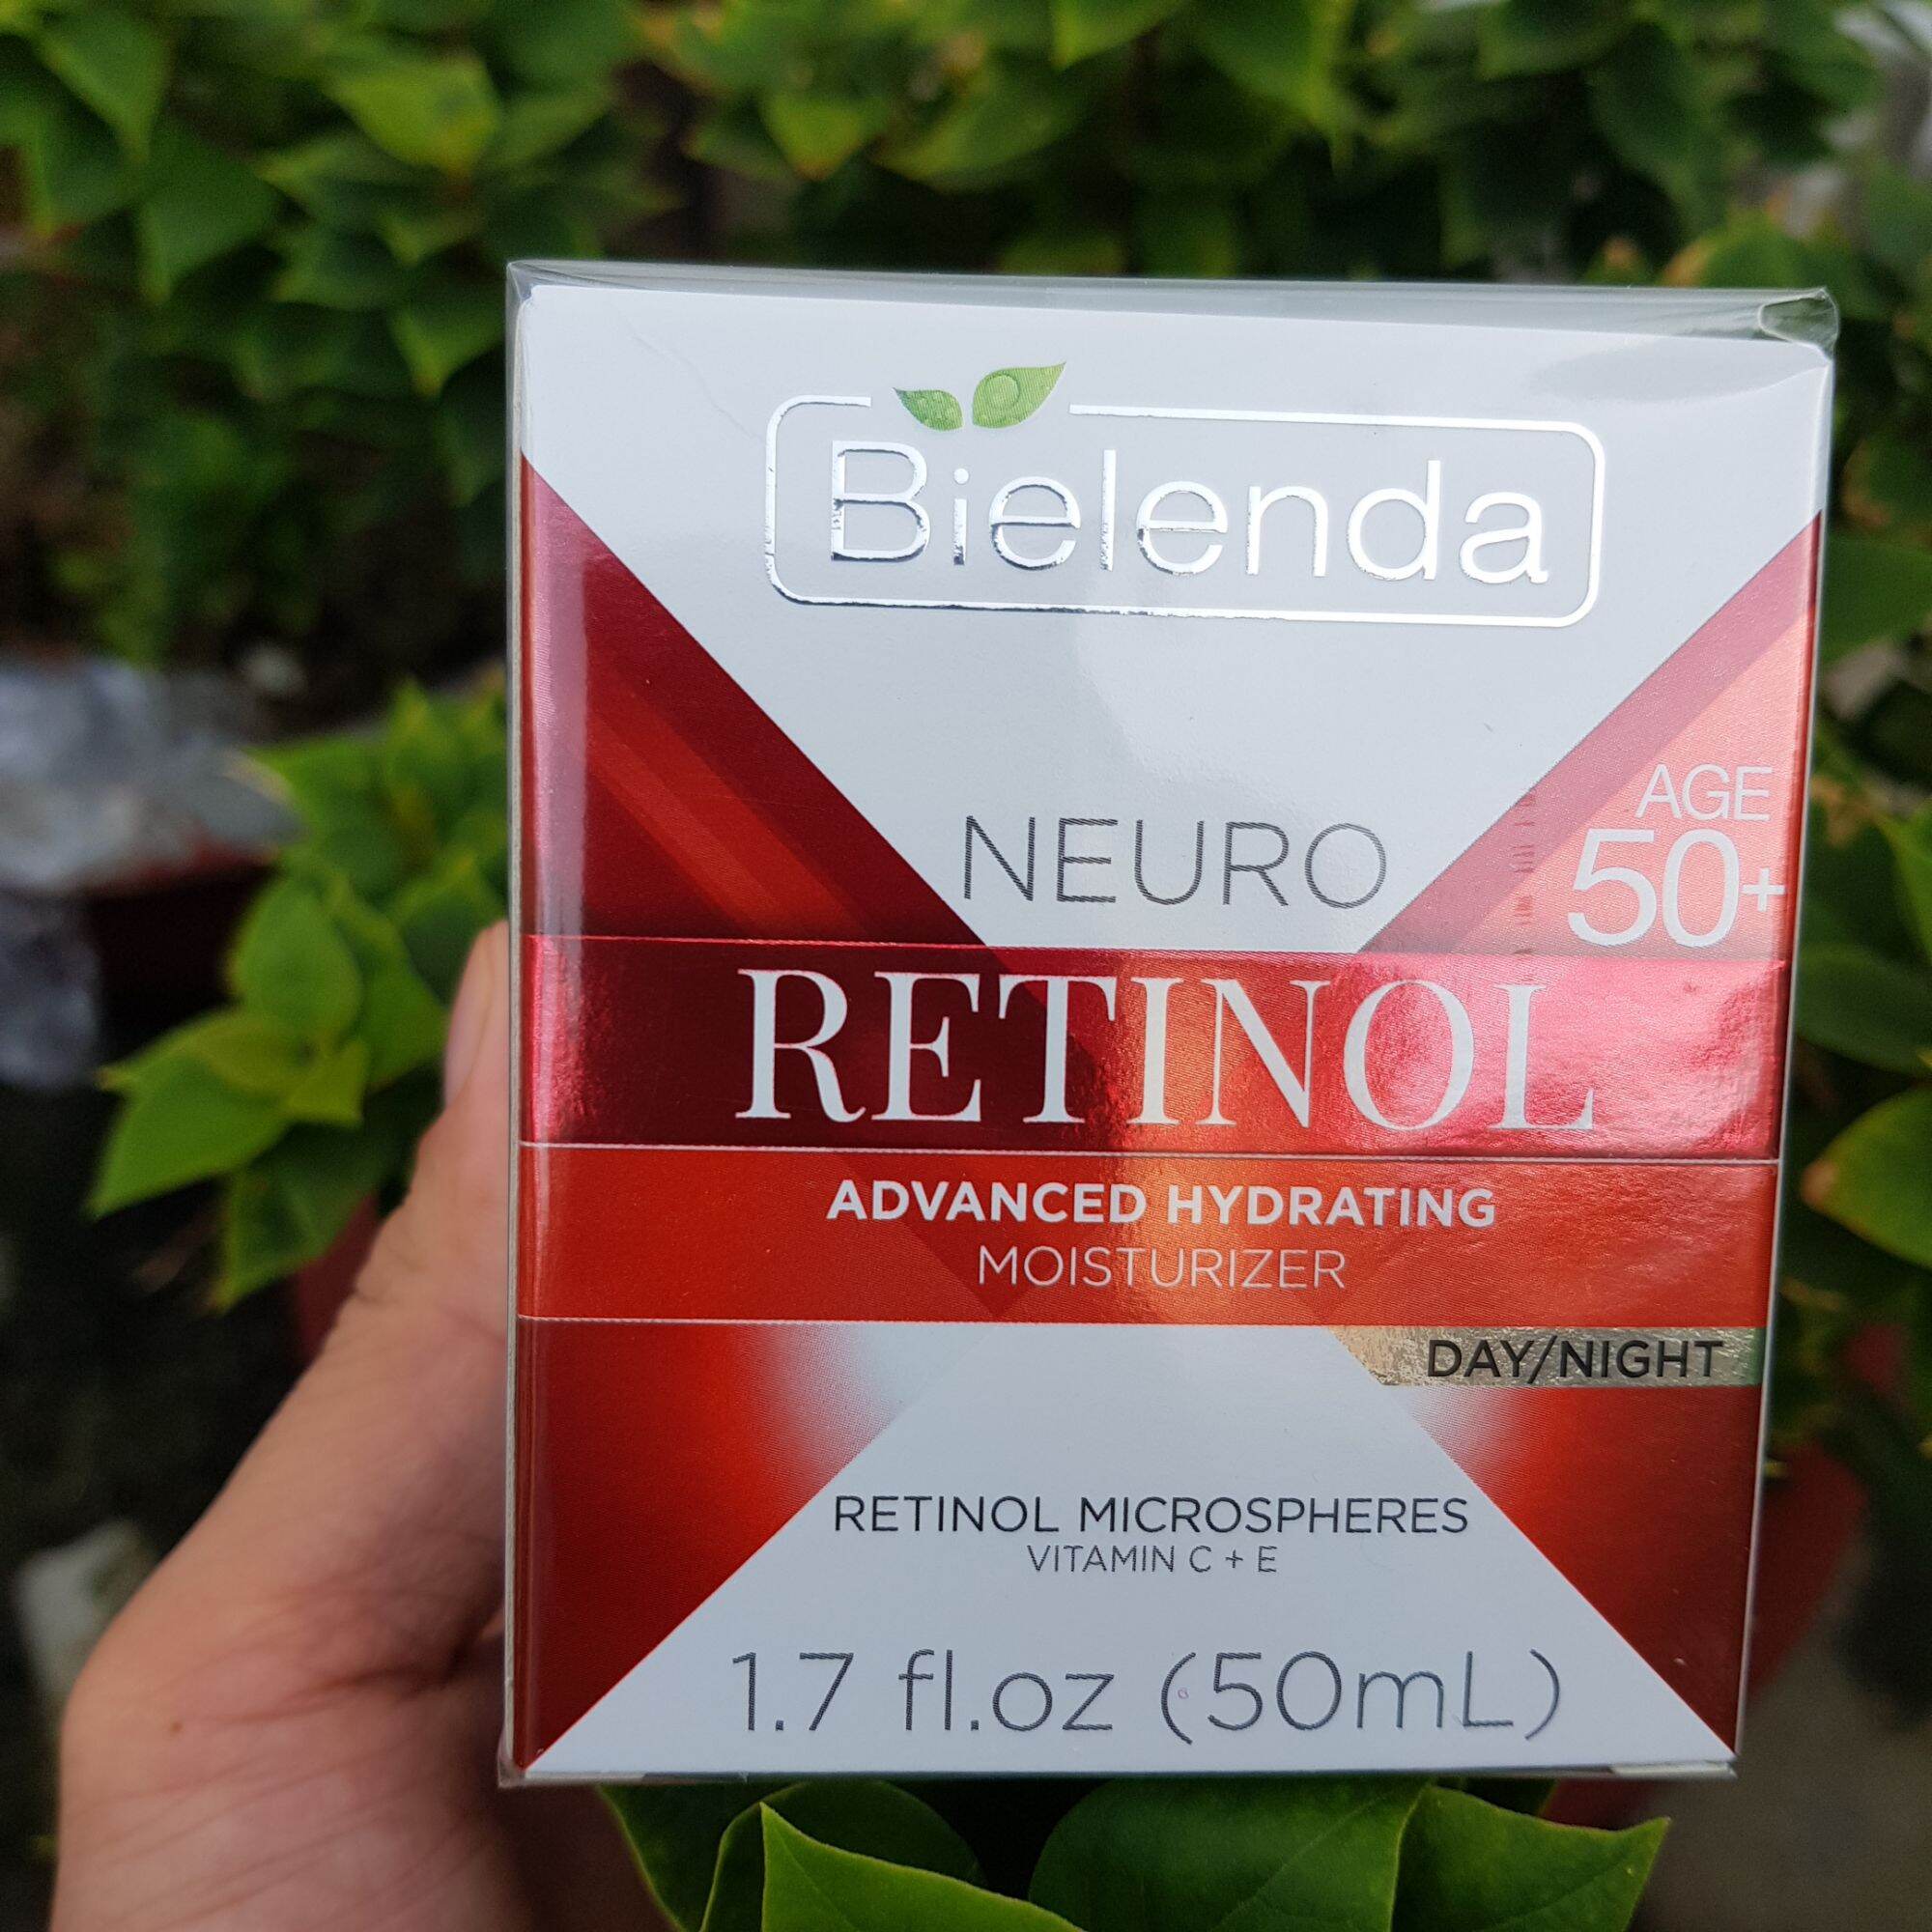 [HCM]Kem dưỡng Bielenda Neuro Retinol Lifting Anti-wrinkle Face Cream Concentrate 50+ dưỡng ẩm căng mịn da